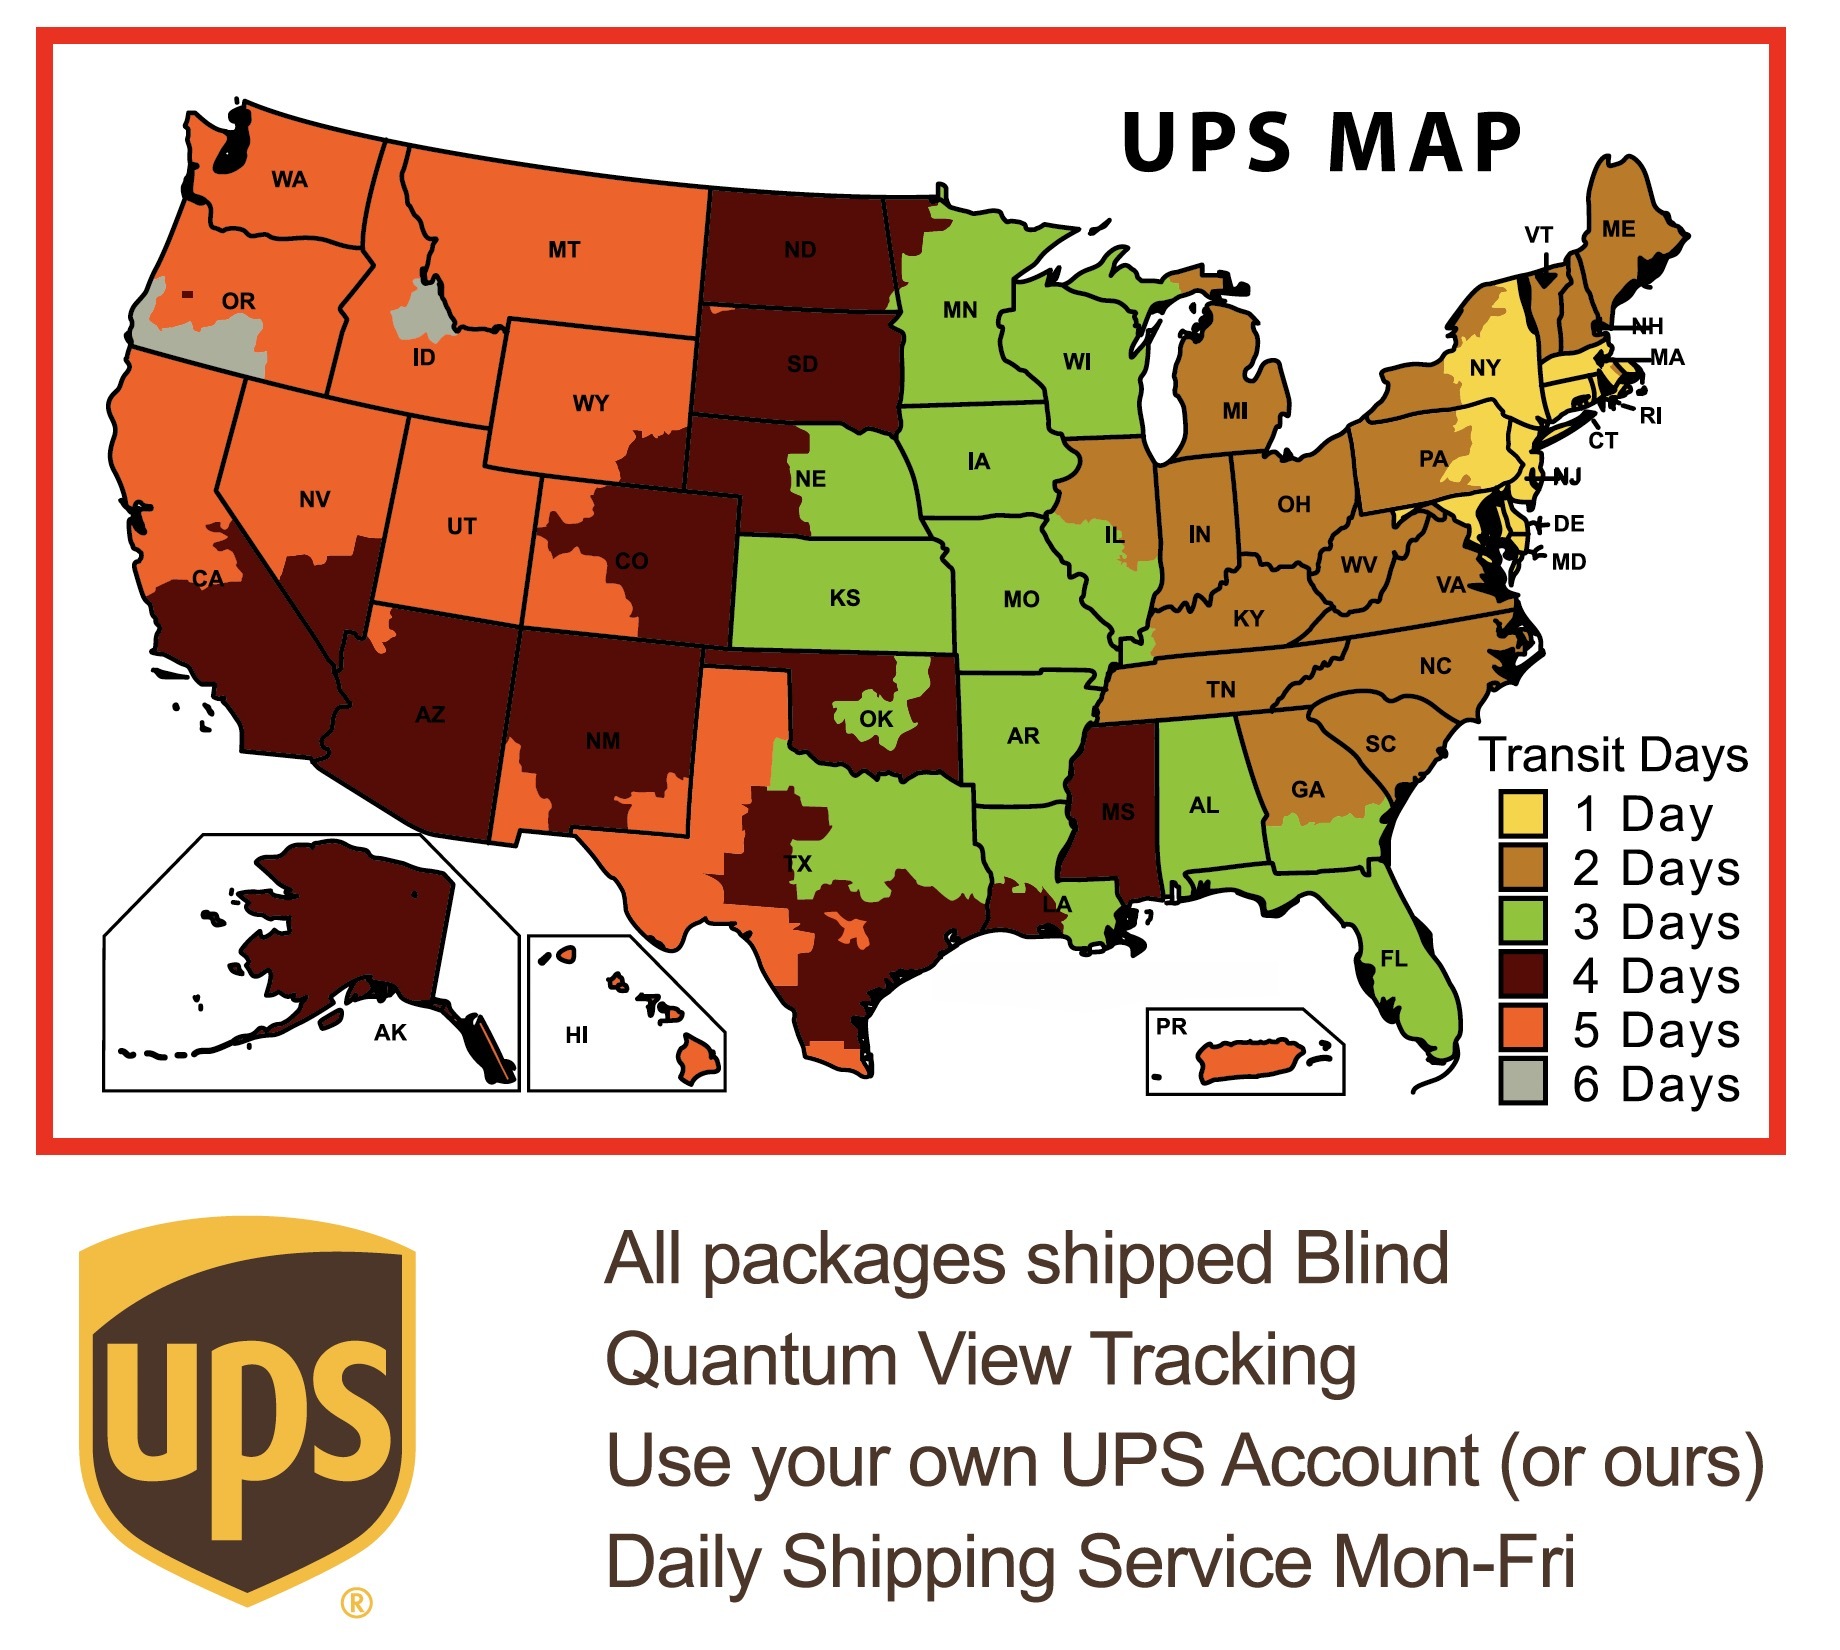 UPS Shipping Image